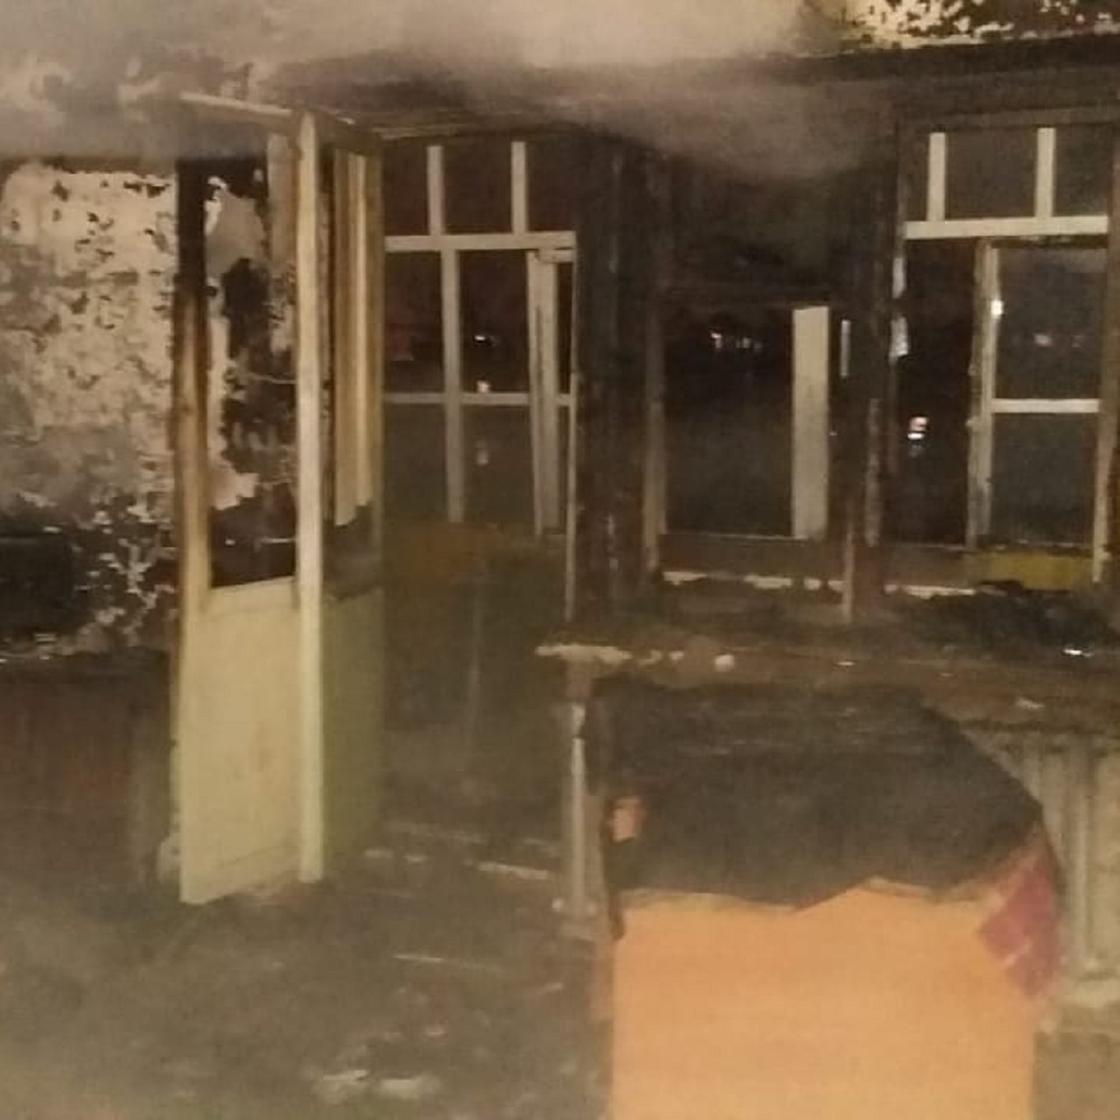 Женщина и мужчина погибли в пожаре в квартире в Темиртау (фото)